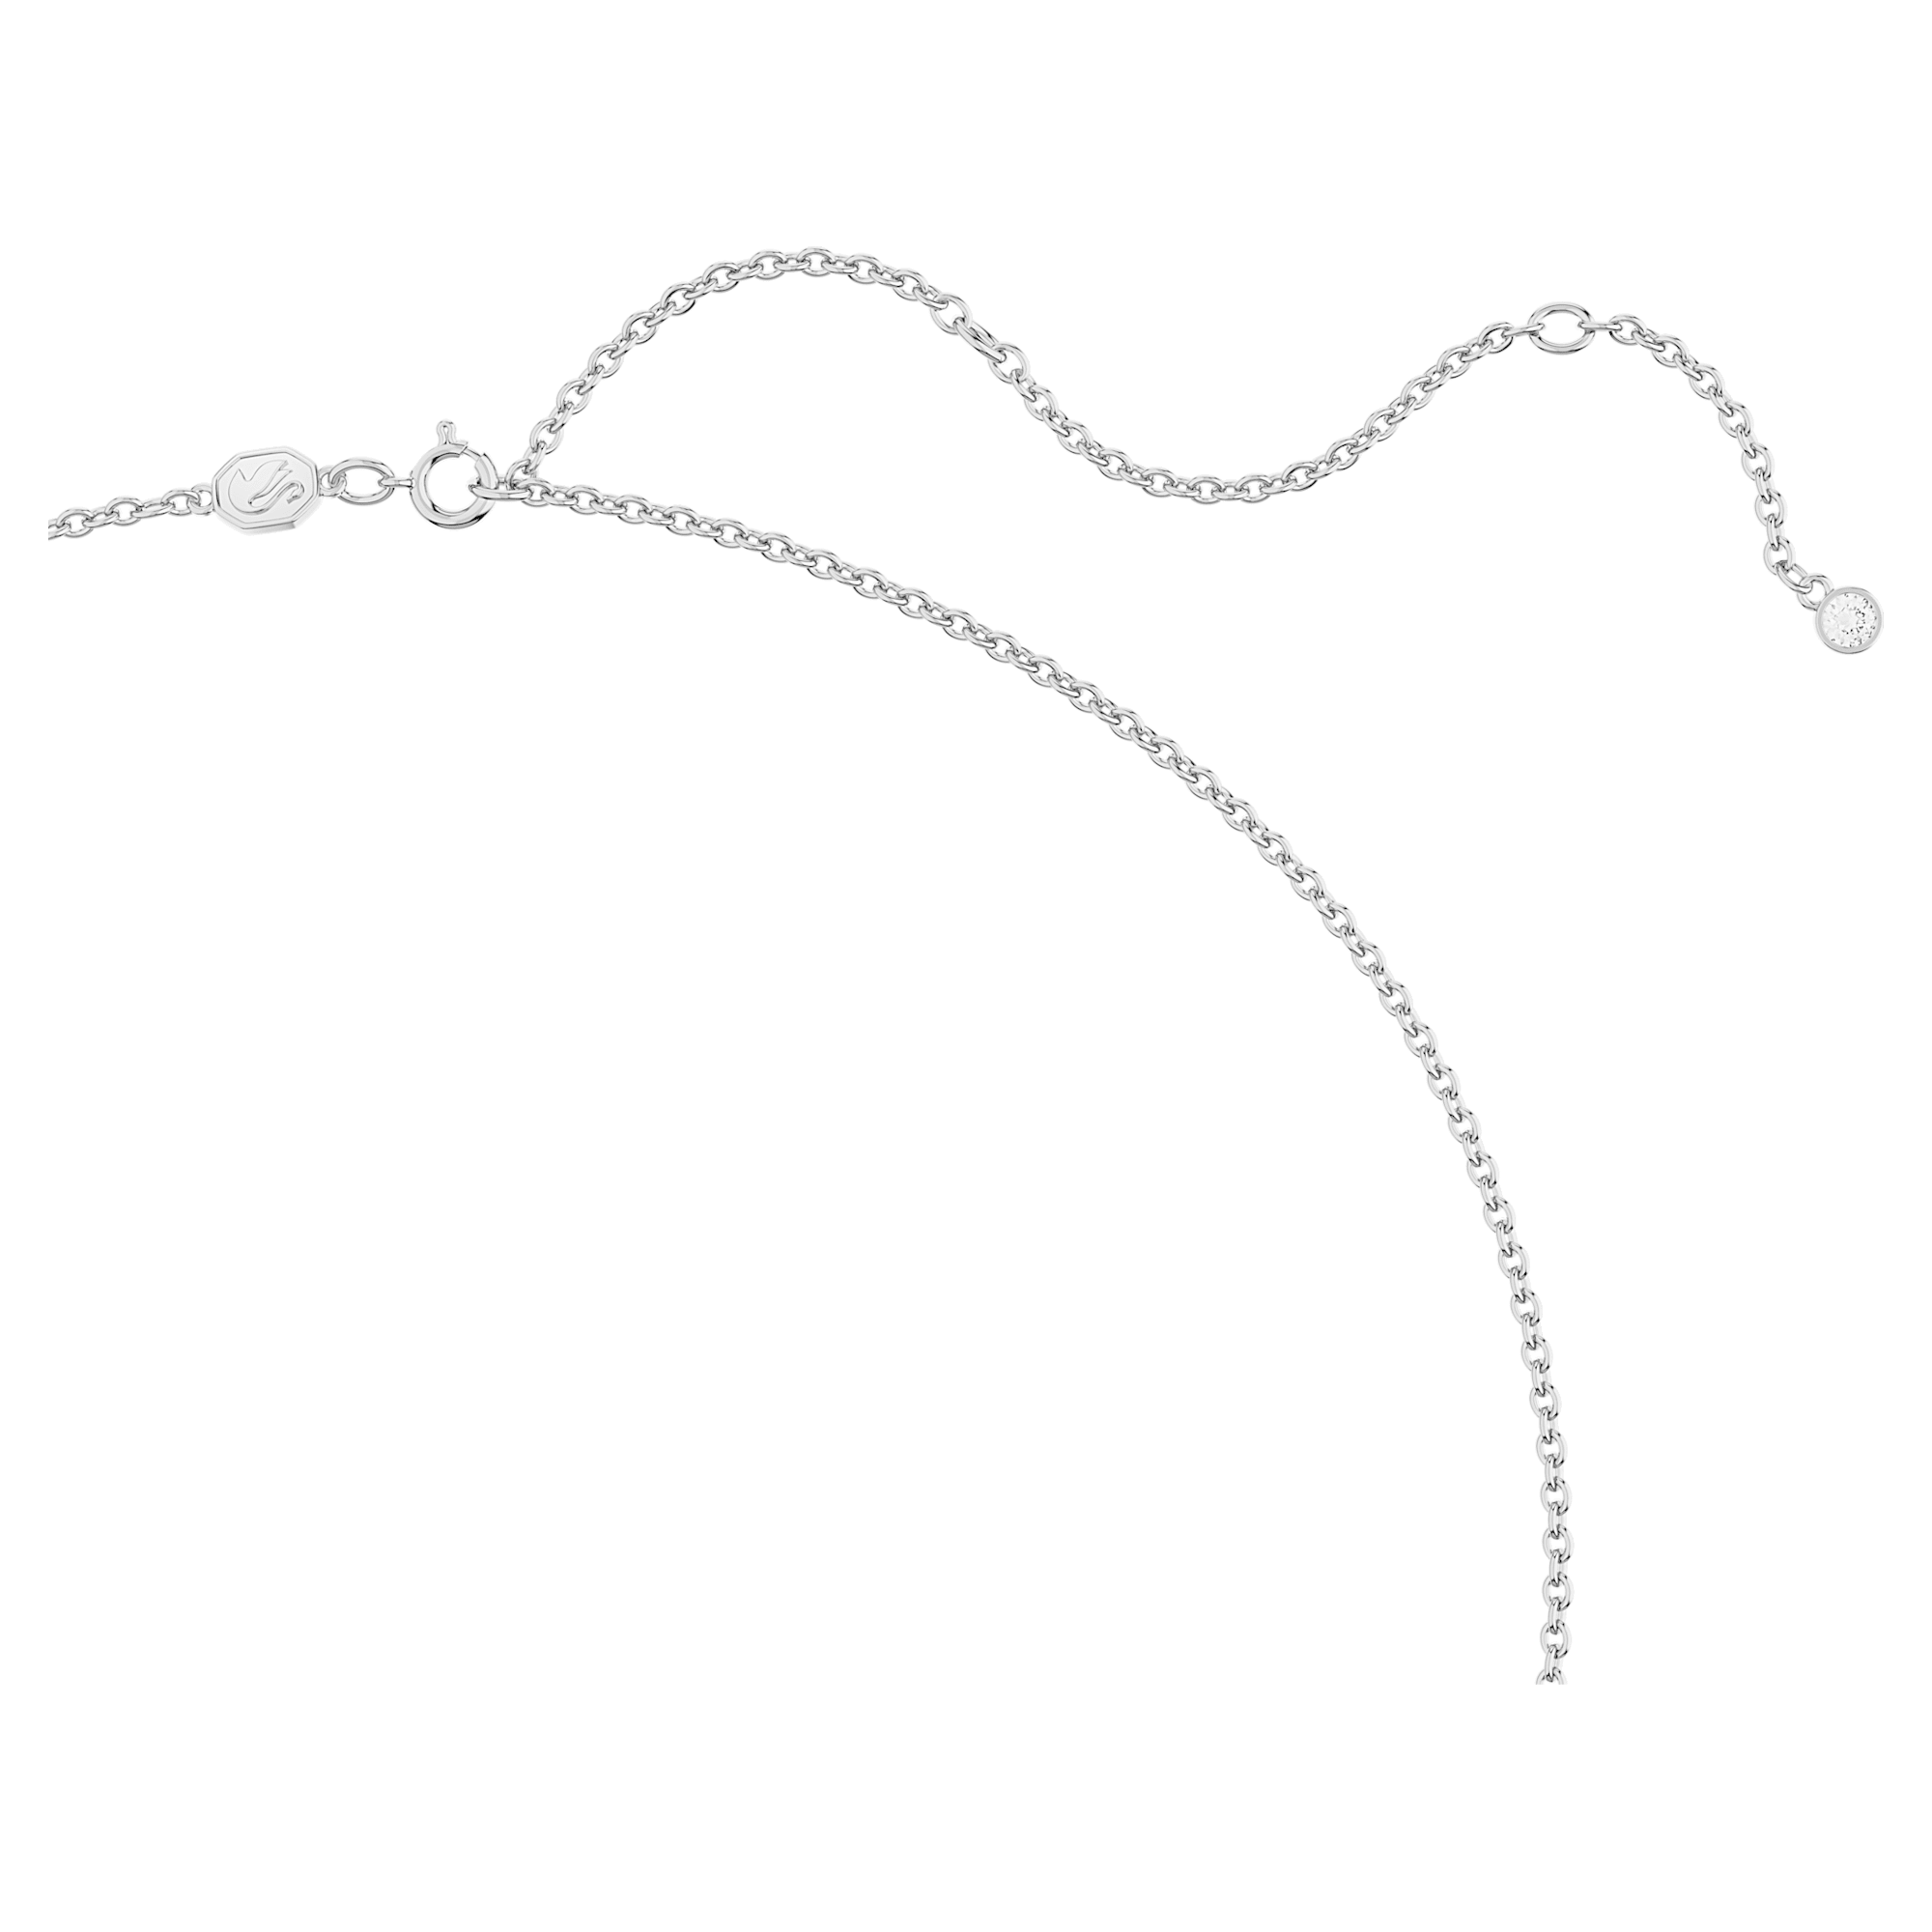 Volta - Knot - White Silver - Necklace - Swarovski